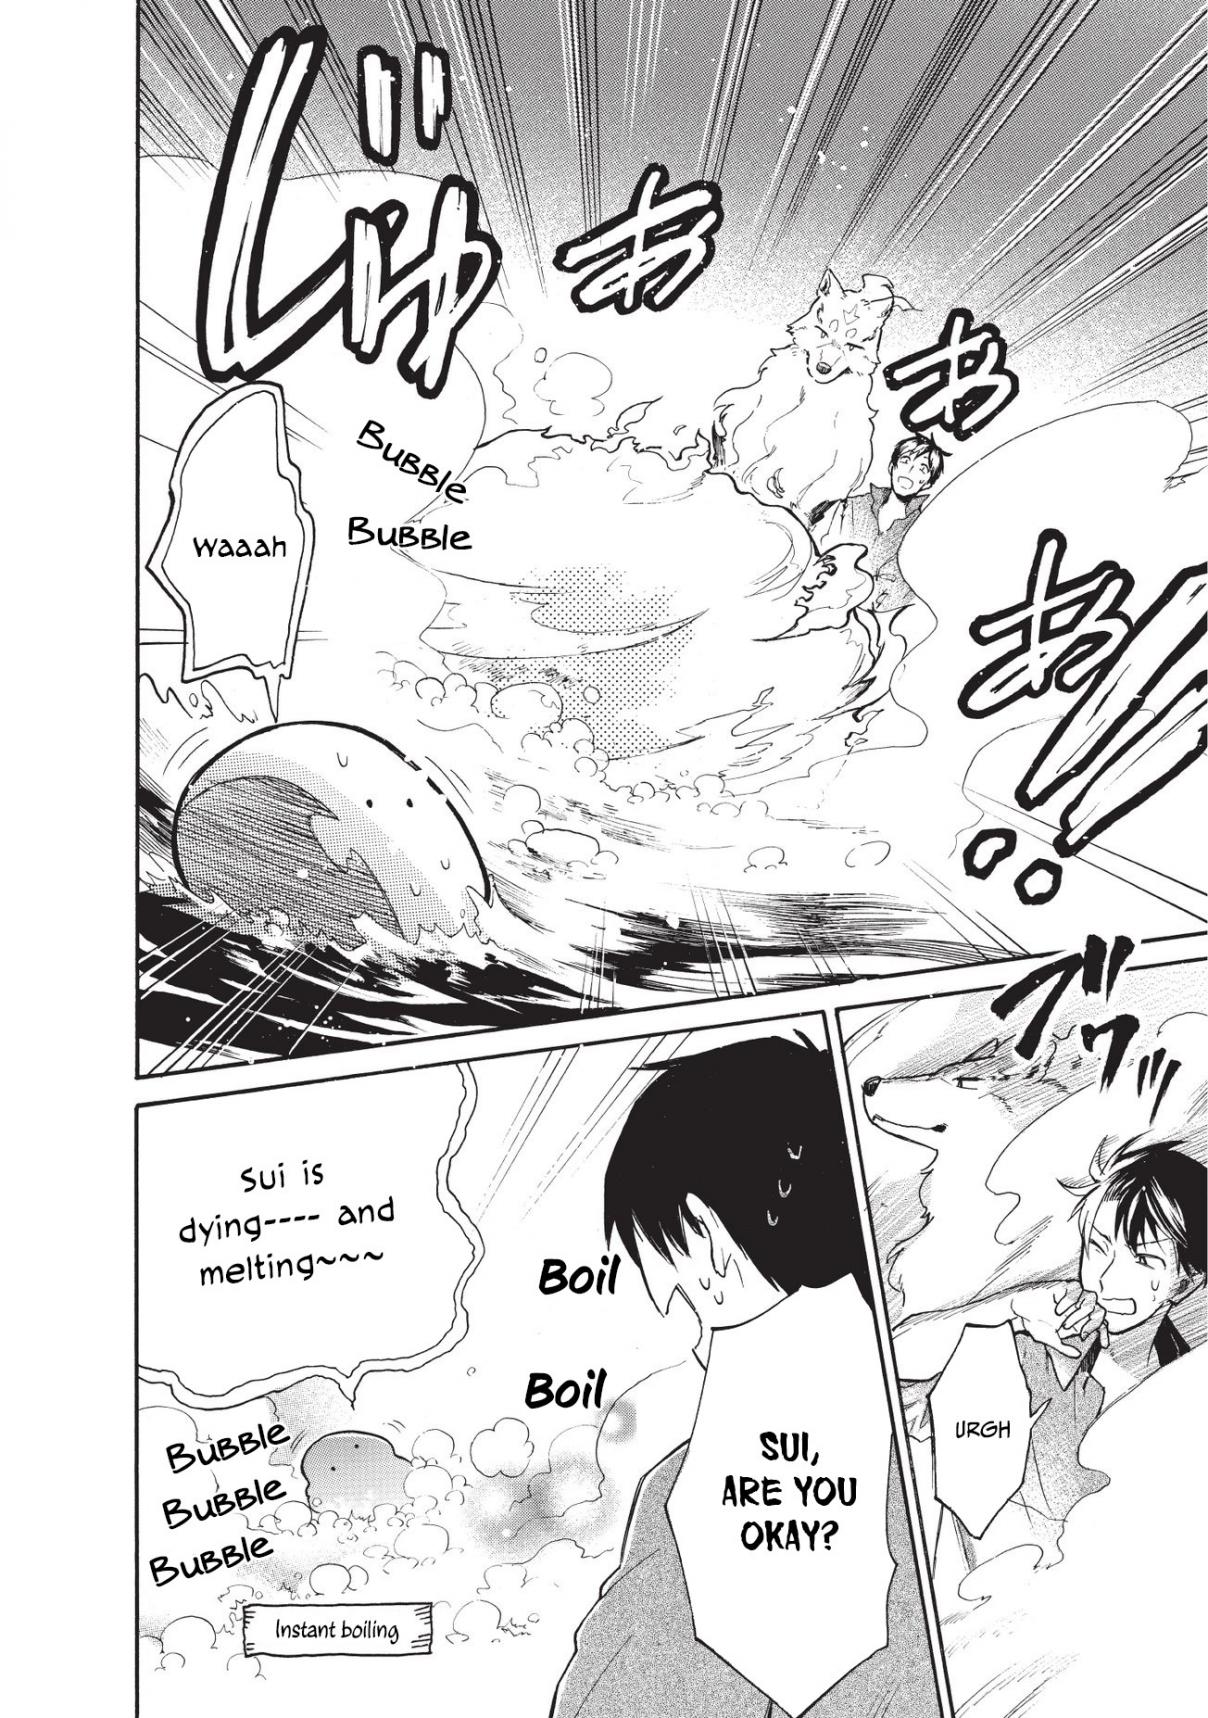 Tondemo Skill de Isekai Hourou Meshi: Sui no Daibouken Vol. 2 Ch. 9 Heating Up the Springs